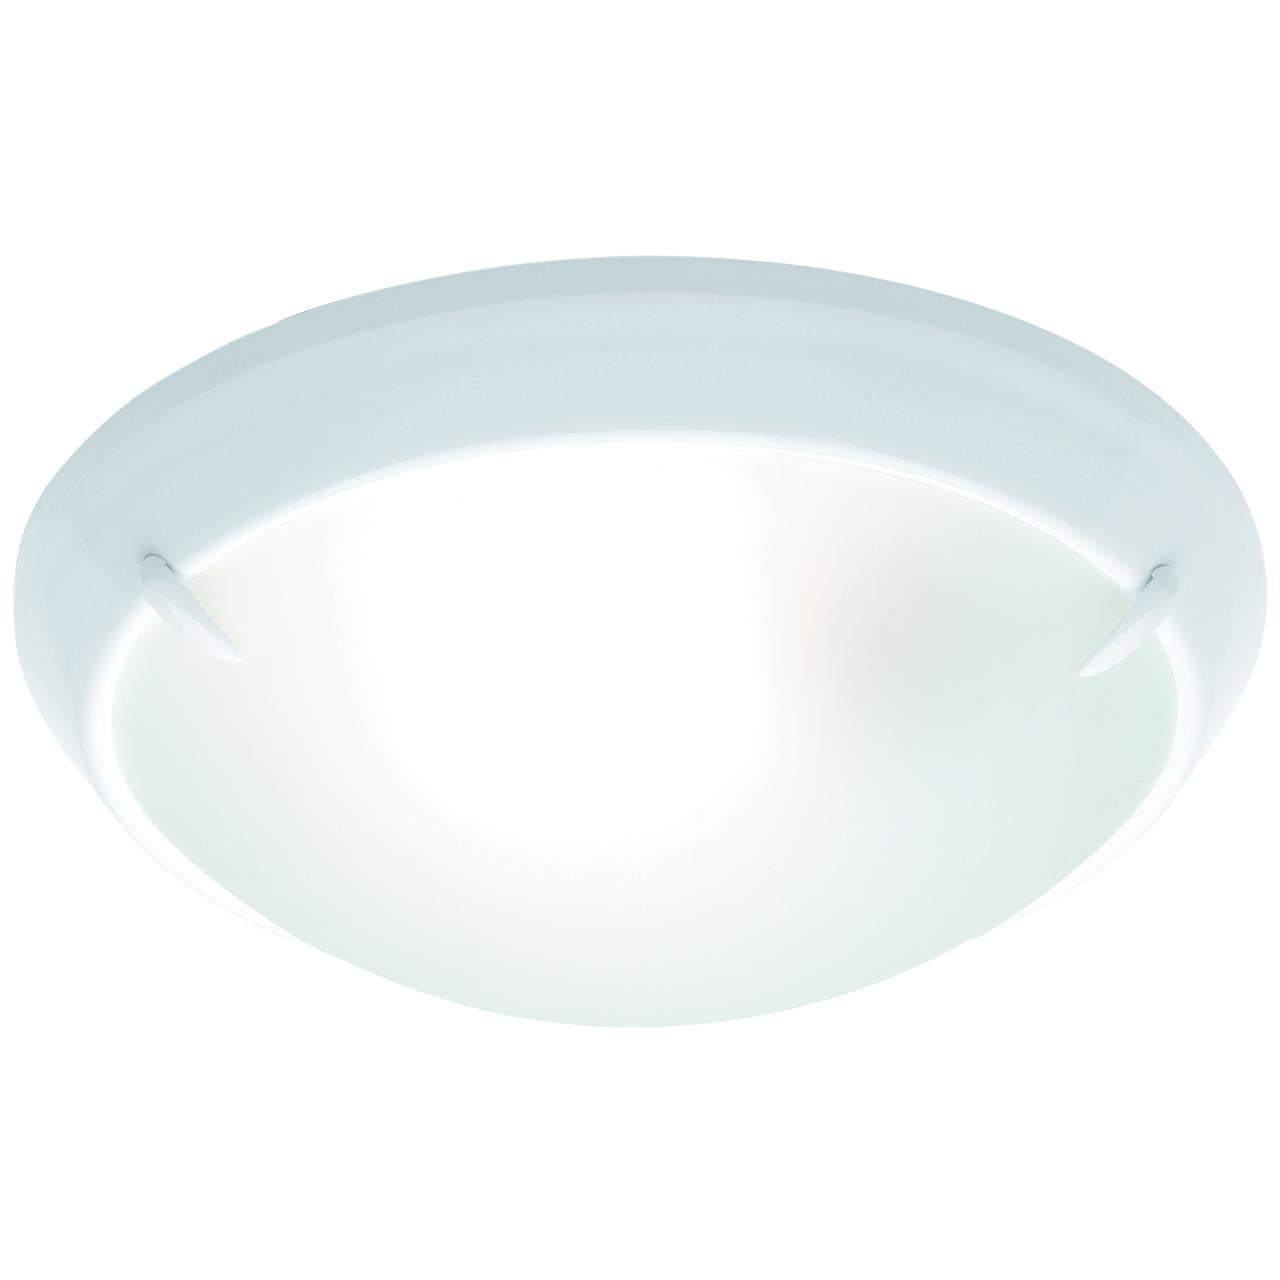 Mainstays 12-inch 1-Light Indoor Flush-Mount Ceiling Light, White Finish